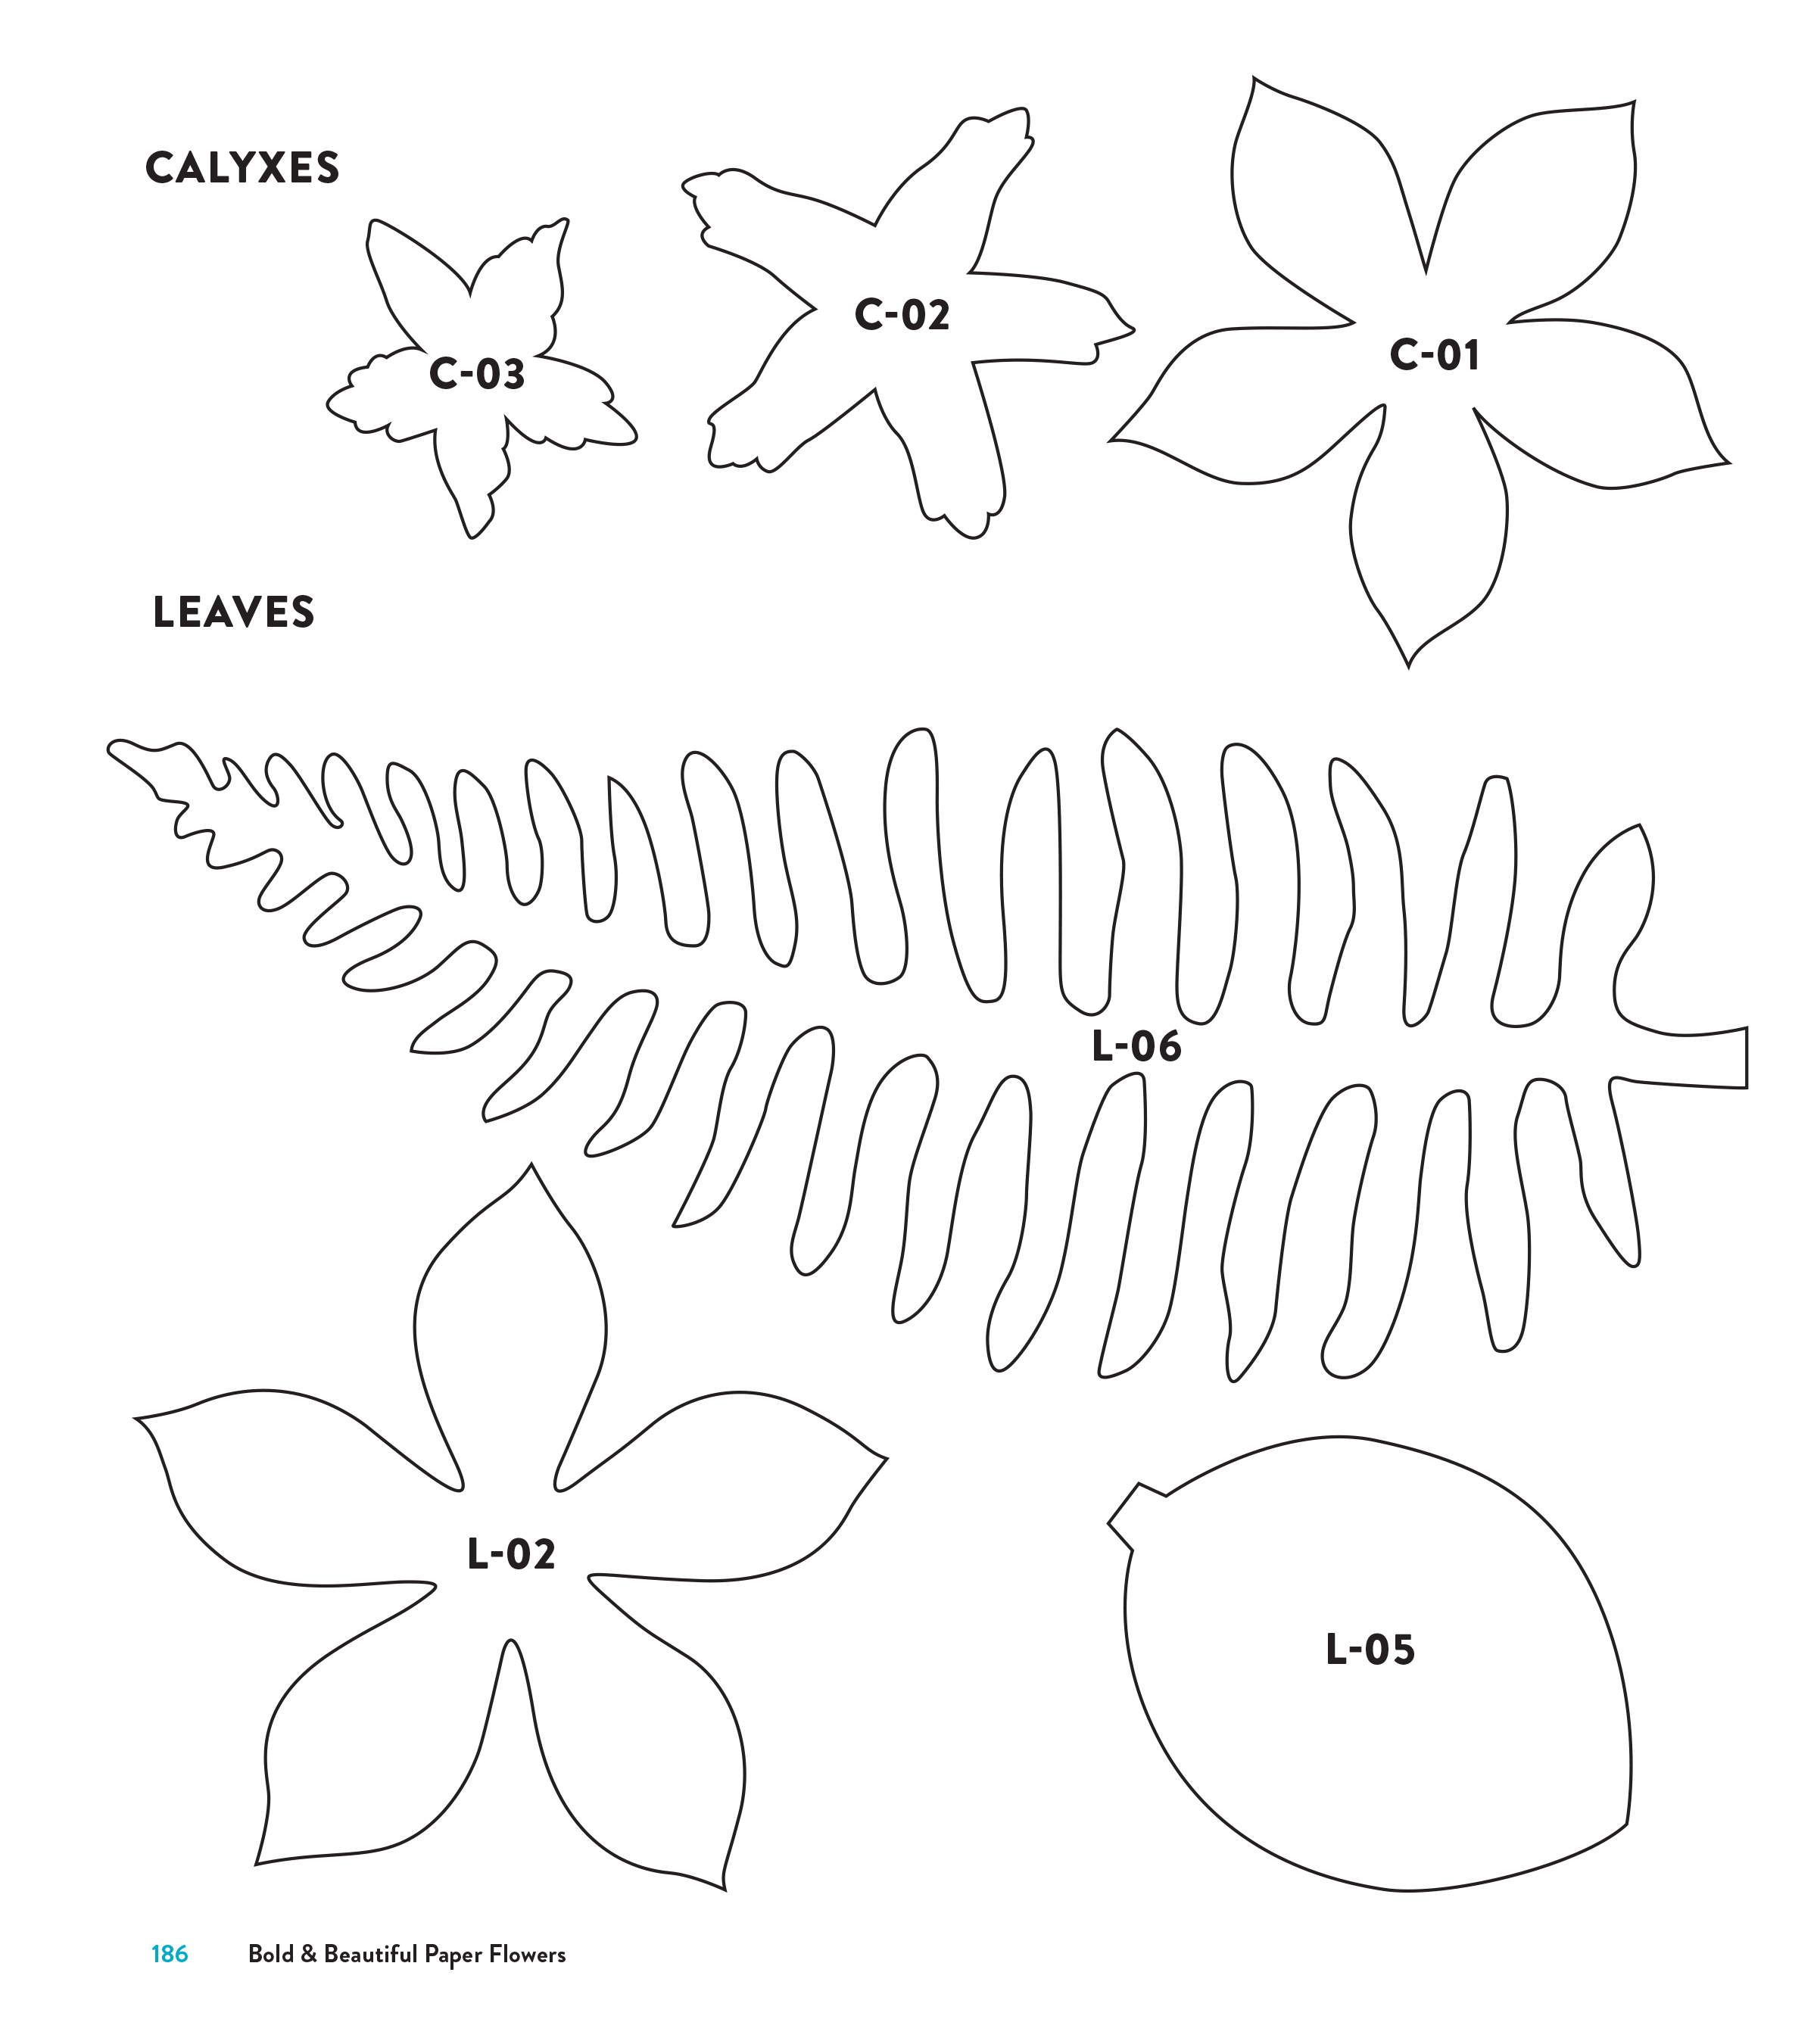 printable paper flower templates